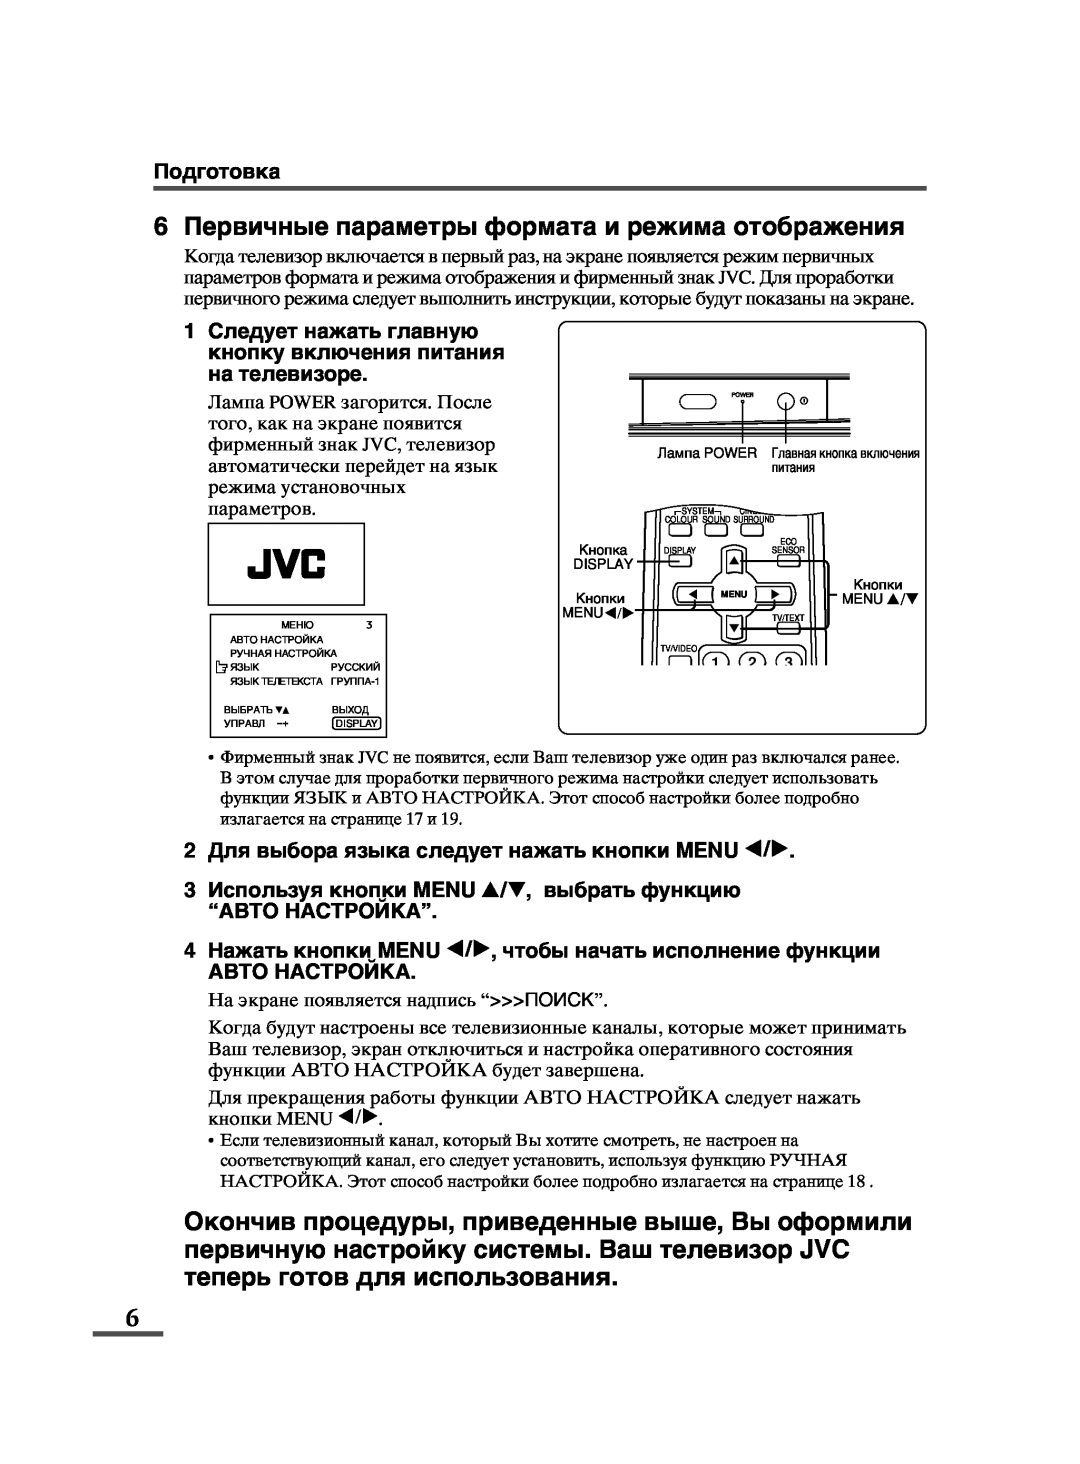 JVC specifications Menu T, MENU t, Power, + Display 